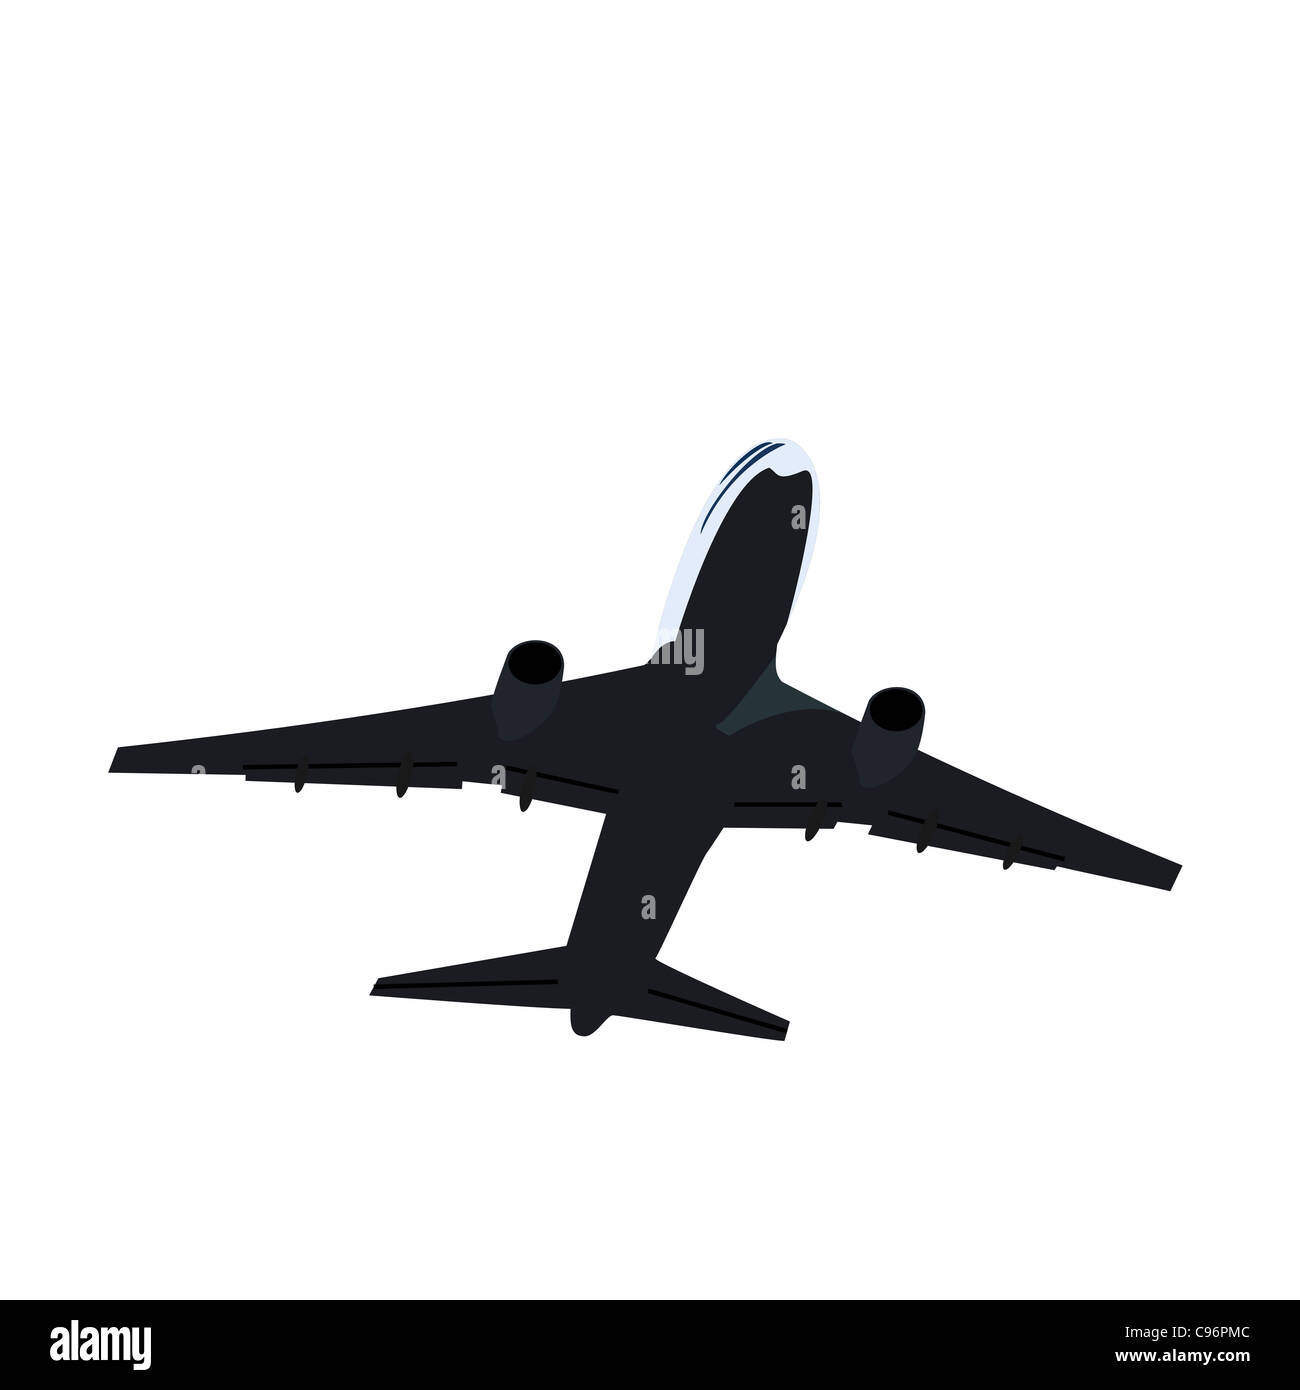 Realistic illustration aircraft - vector Stock Photo